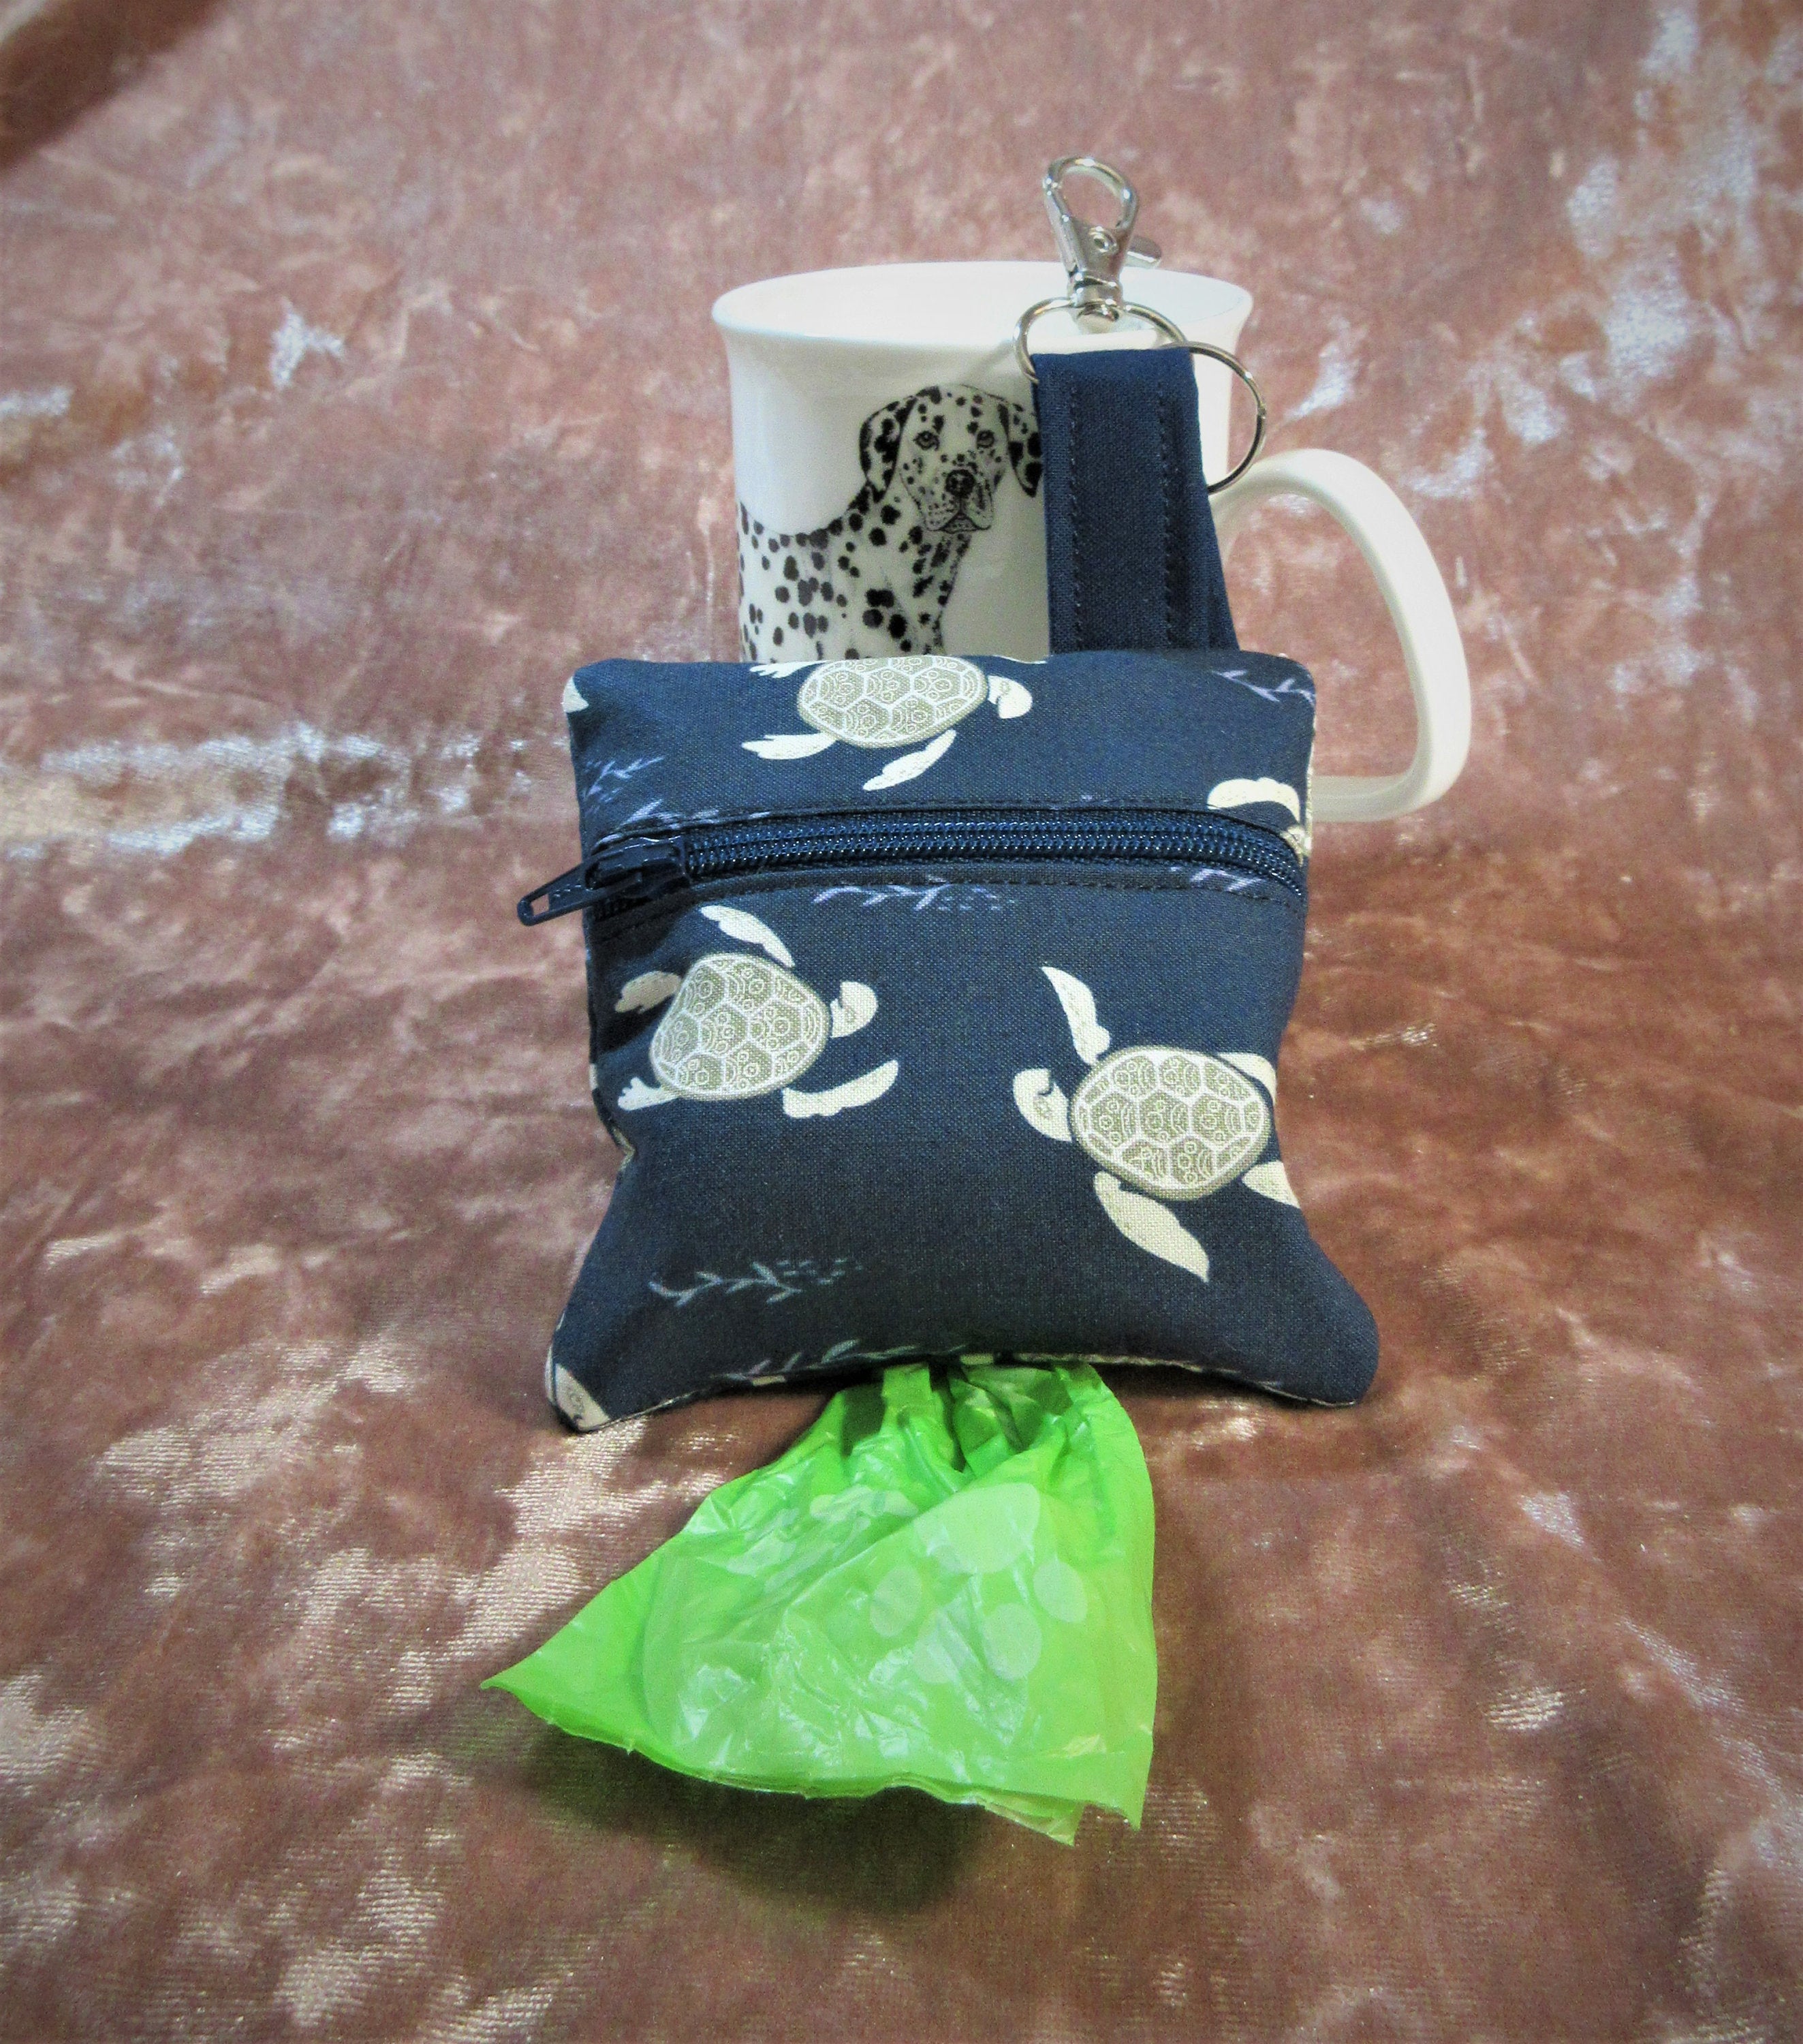 Turtle dog poop bag holder or doody diaper bag holder. Free roll of bags handmade by A Fur Baby Favorite